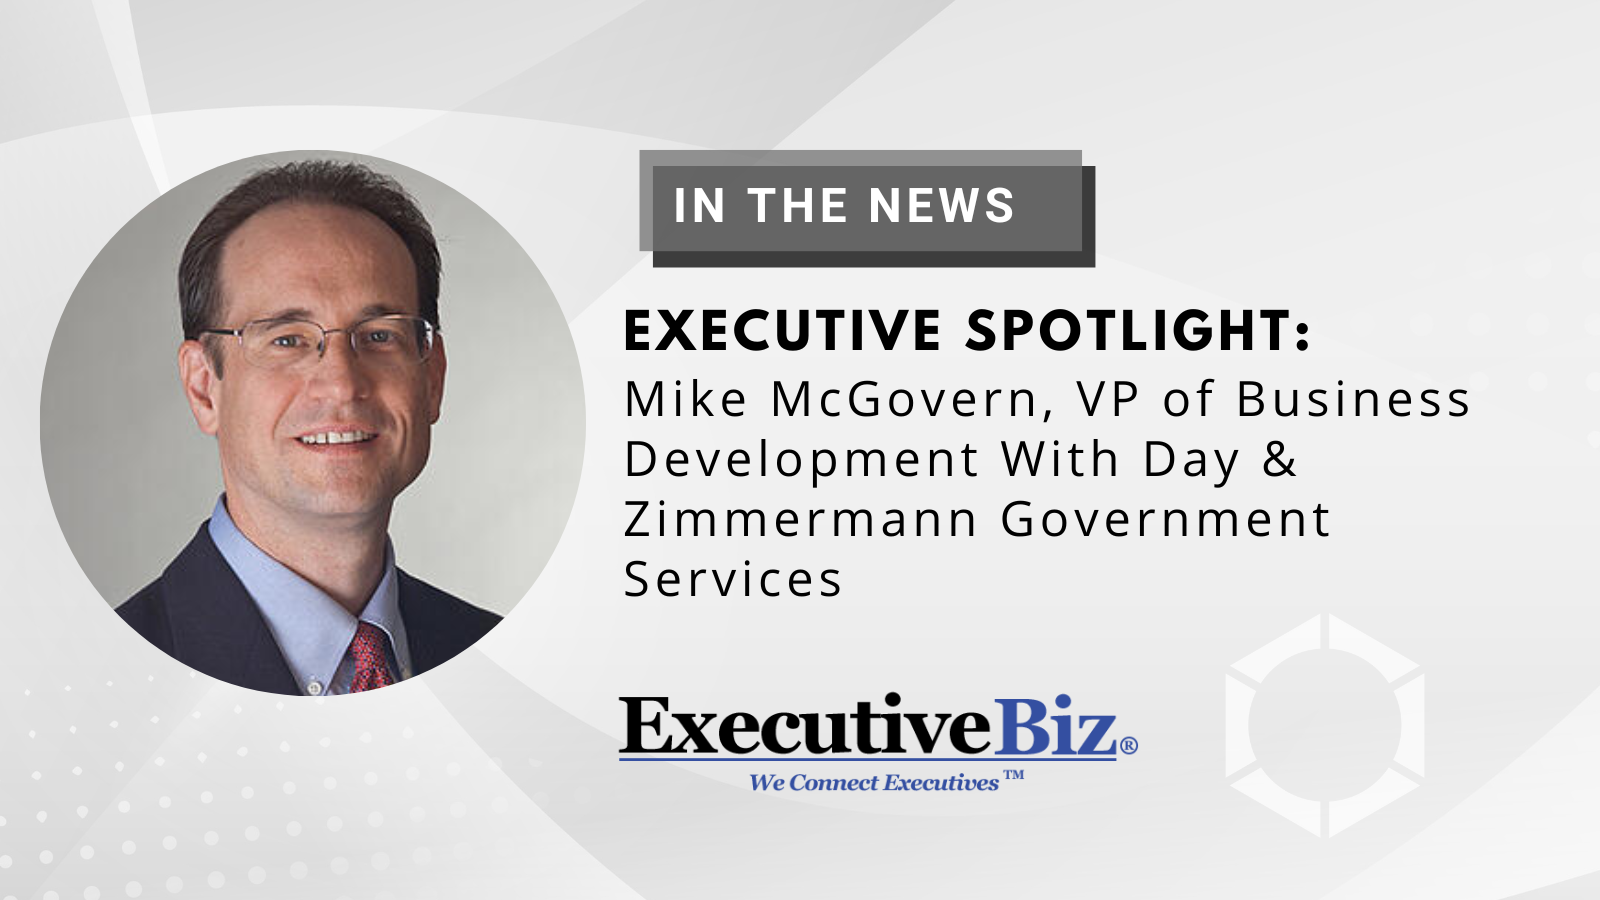 IN THE NEWS: ExecutiveBiz Features Mike McGovern in Executive Spotlight